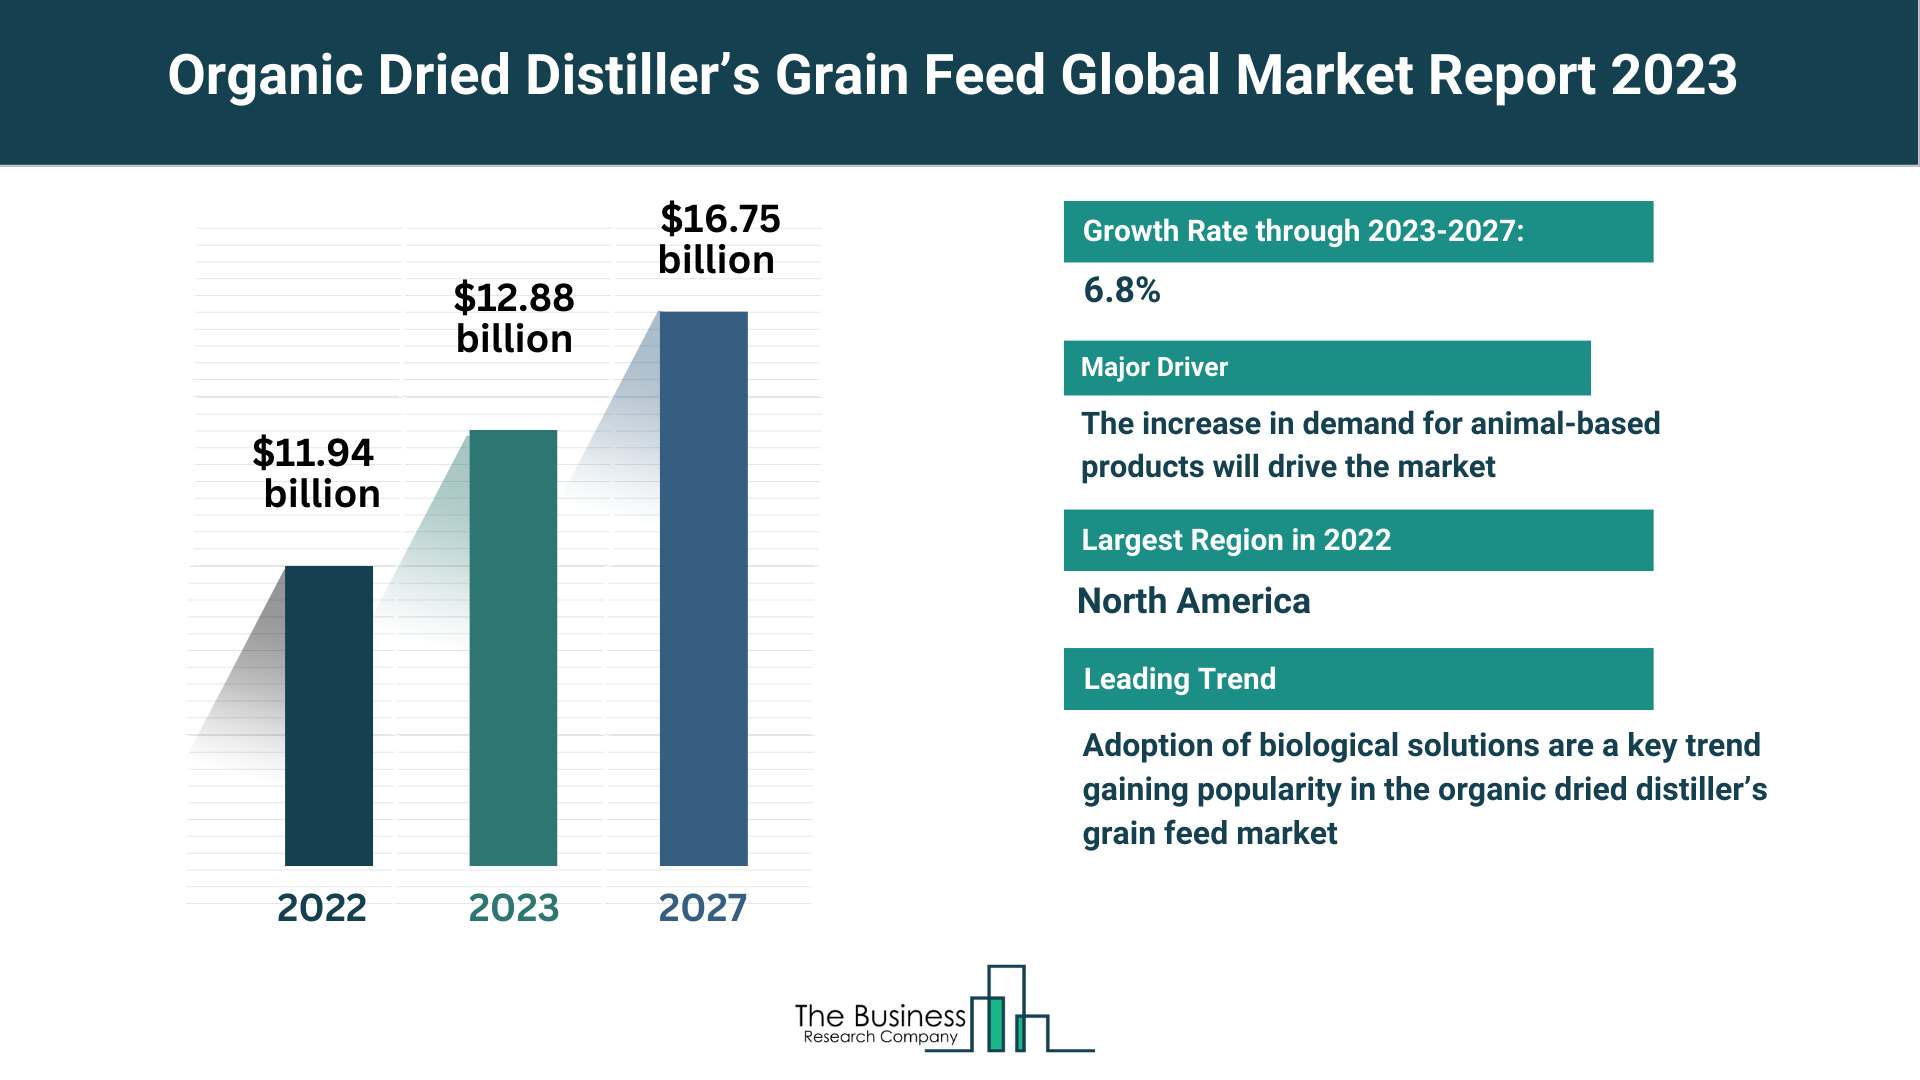 5 Key Takeaways From The Organic Dried Distiller’s Grain Feed Market Report 2023